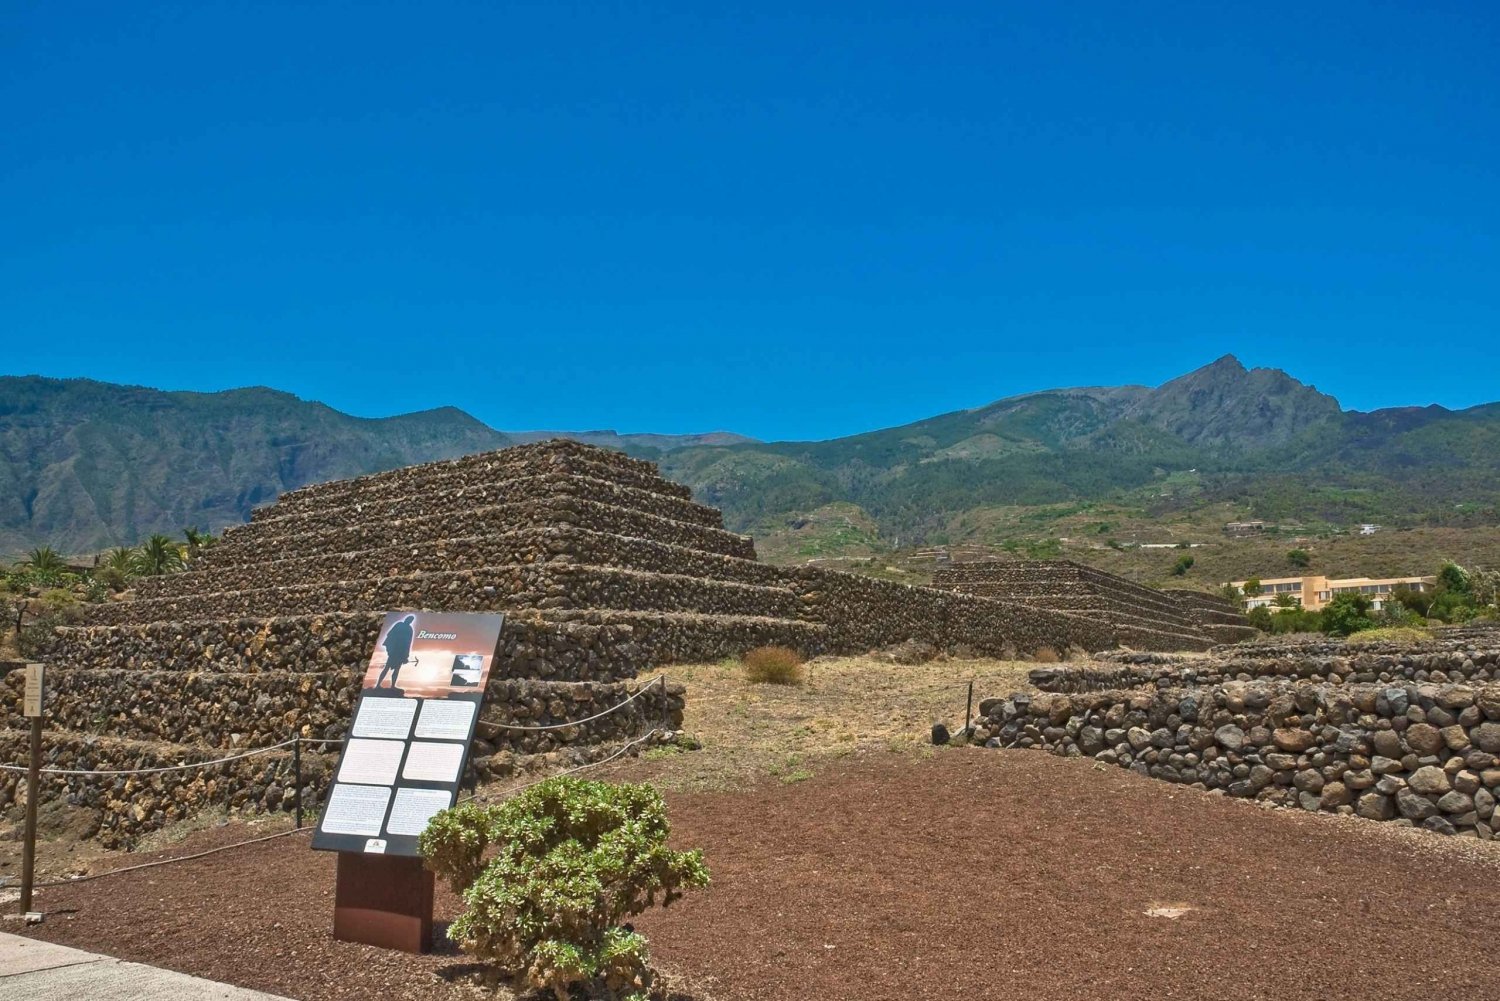 Tenerife: Guided tour at Pirámides de Güímar